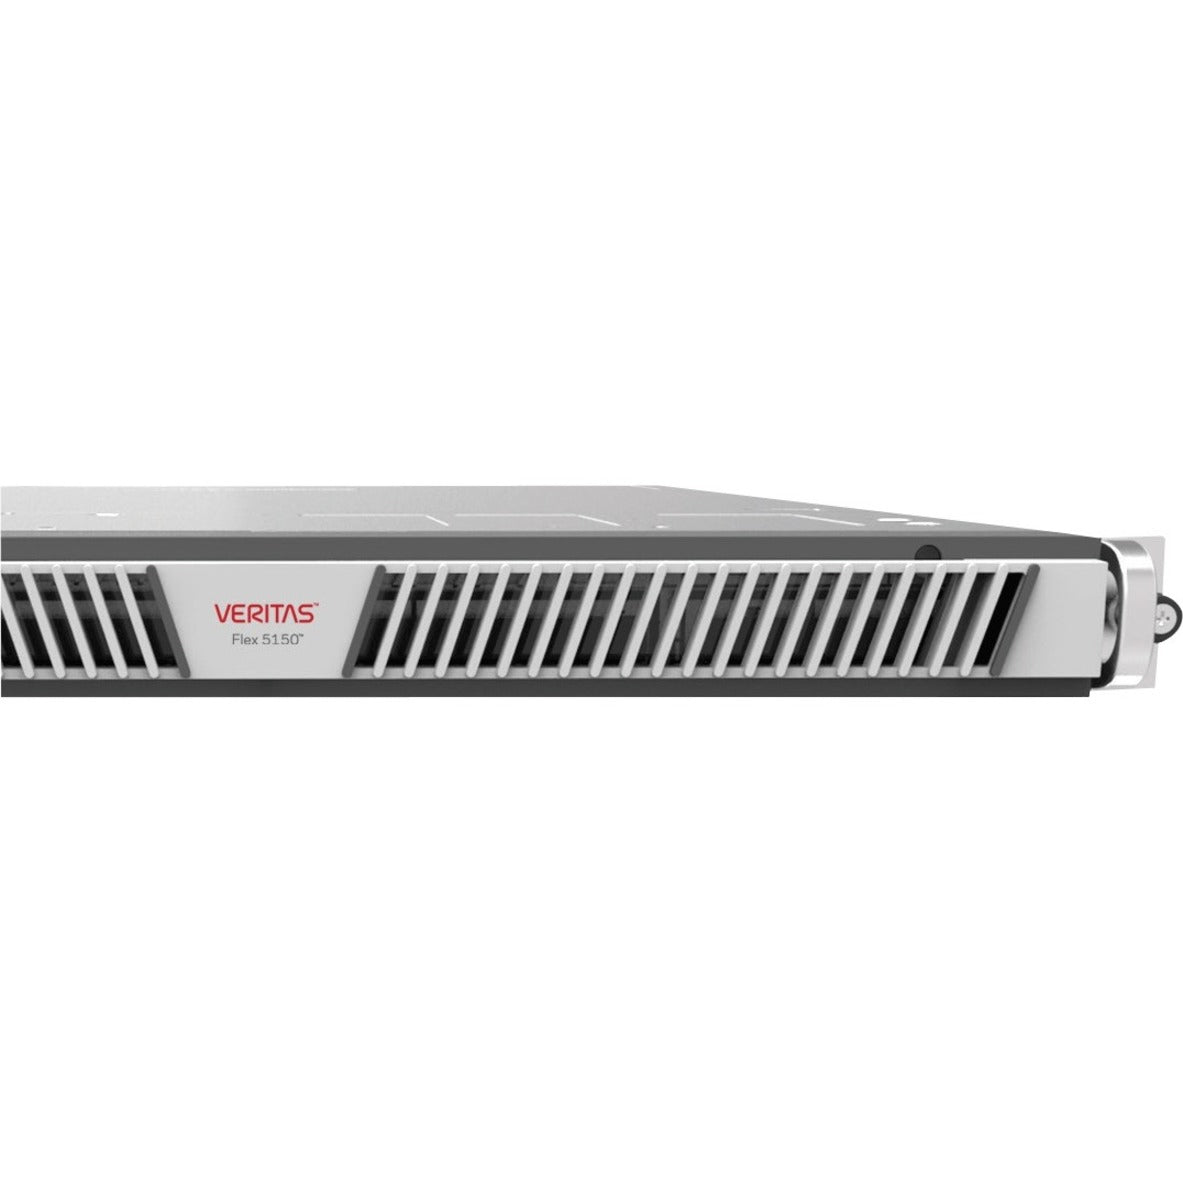 Veritas 26112-M0022 Flex System 5150 NAS Storage System, 15TB Total Hard Drive Capacity Installed, 12Gb/s SAS Controller, 6 Network (RJ-45) Ports